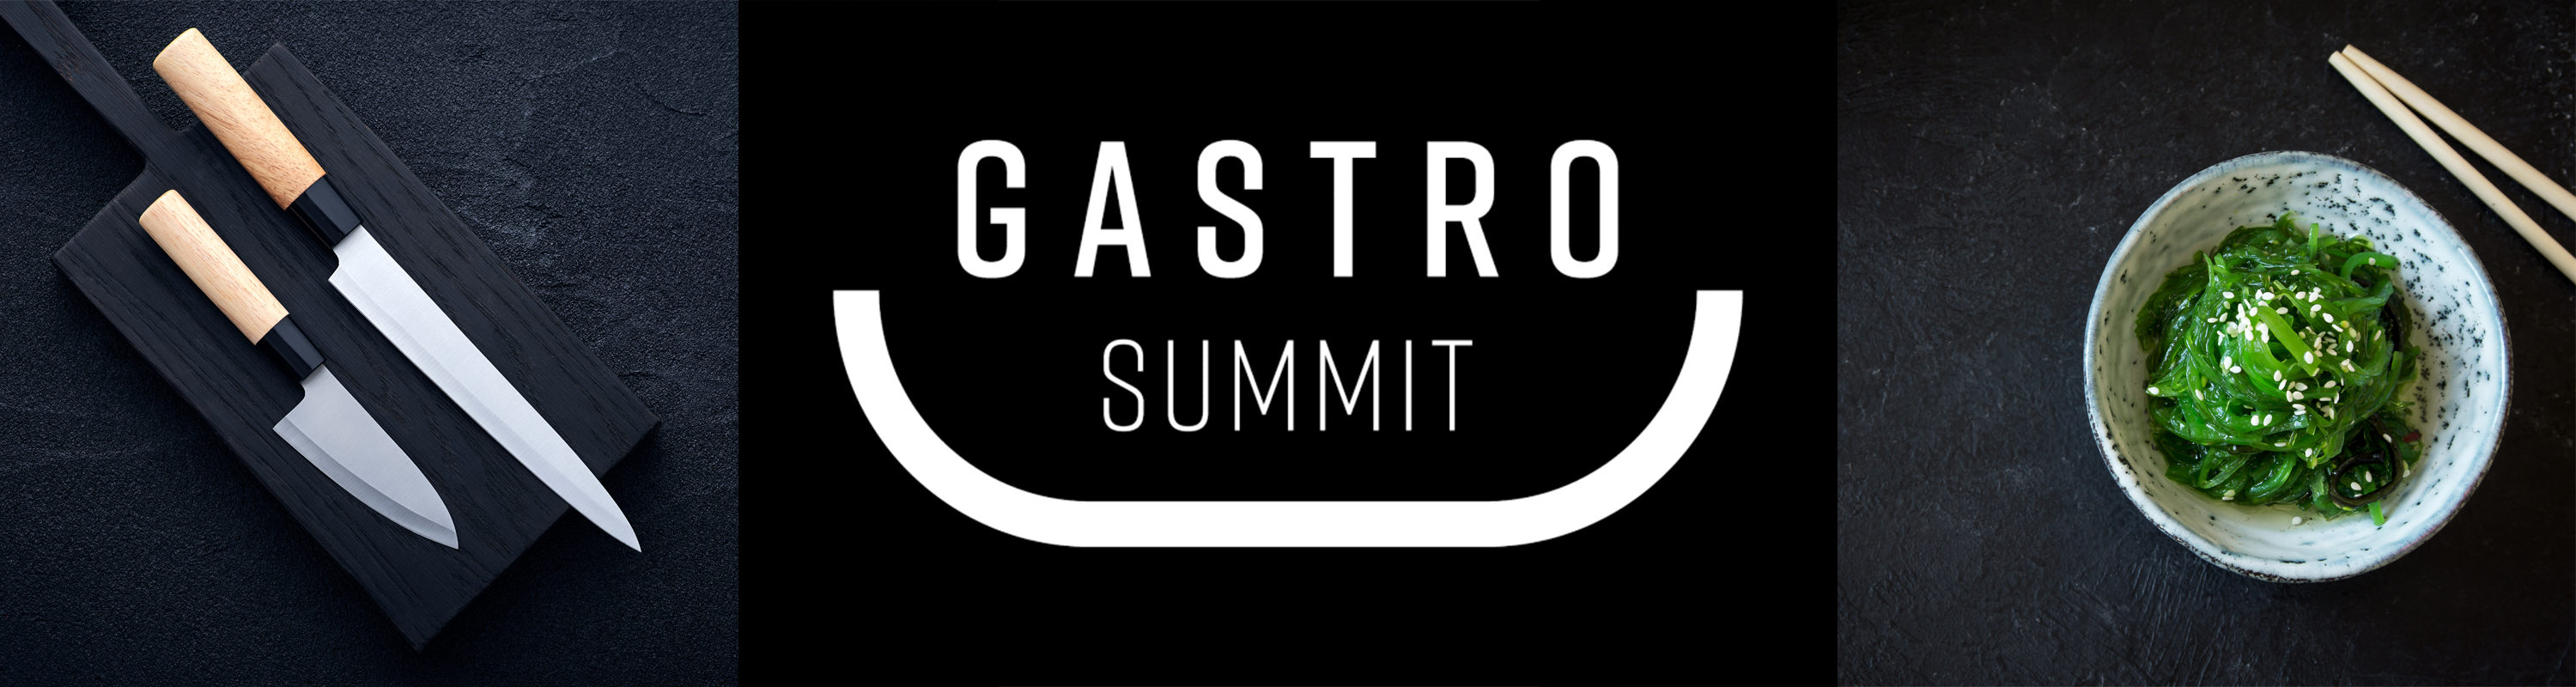 GastroSummit 2019 top